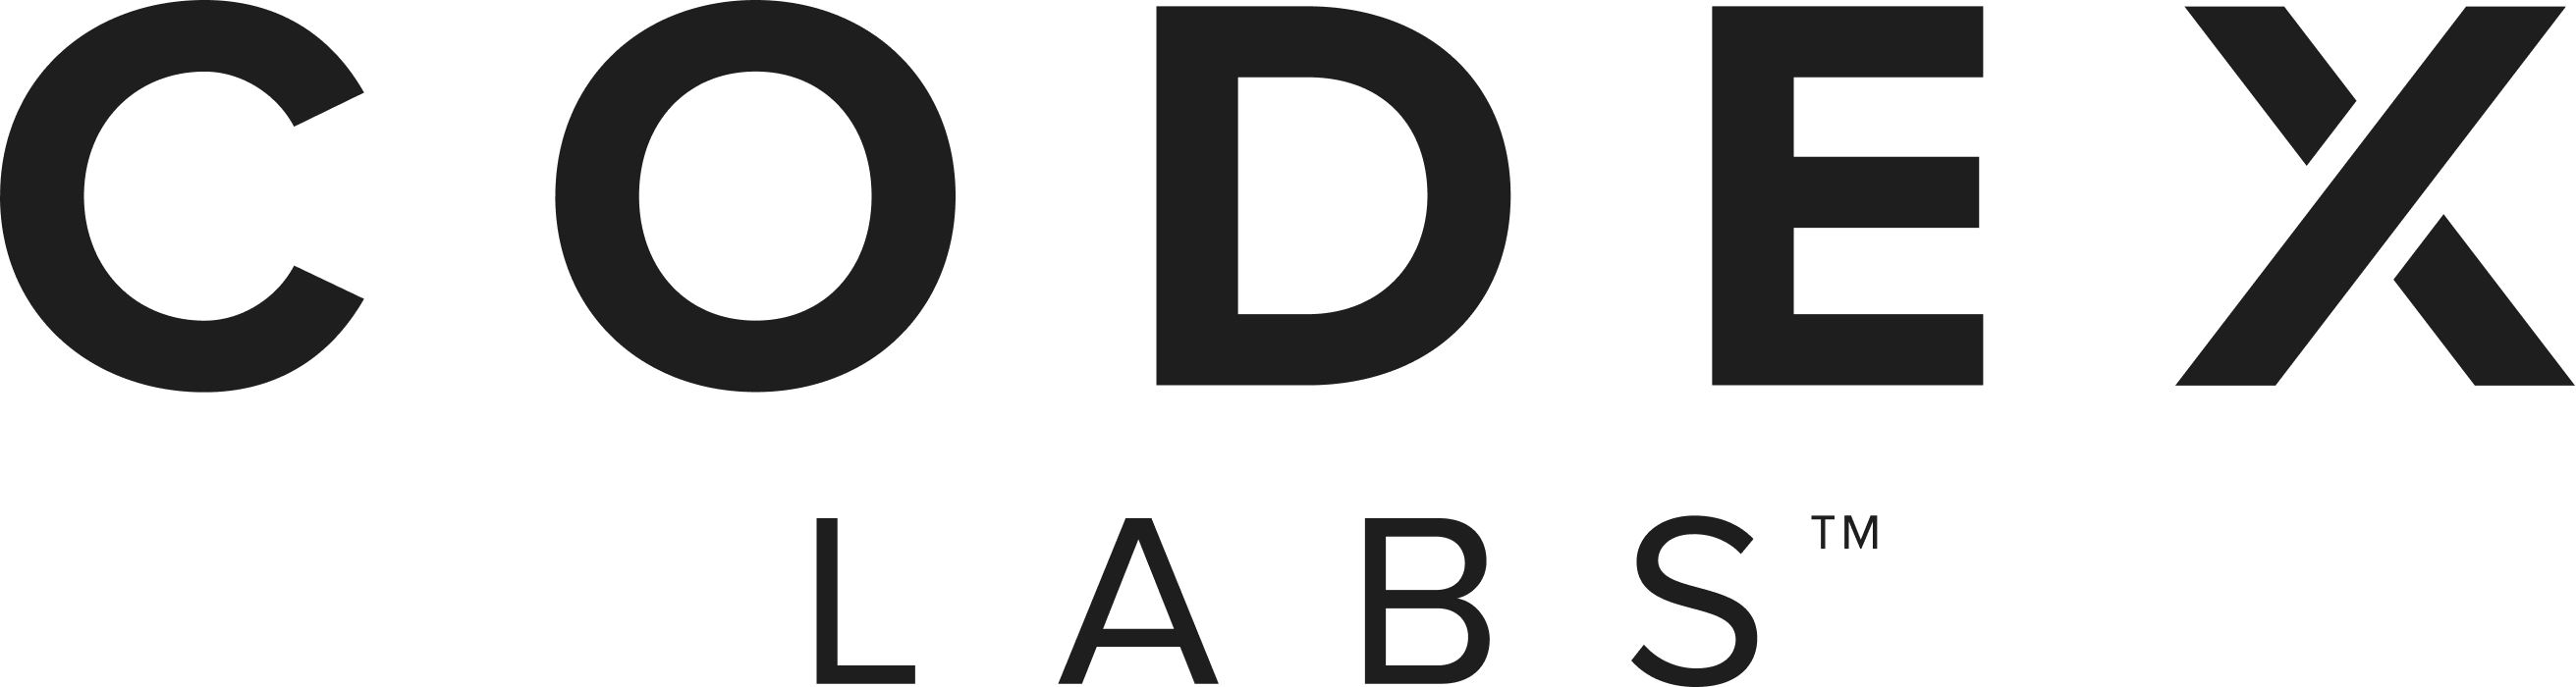 Image of Codex Labs Logo in Black & White